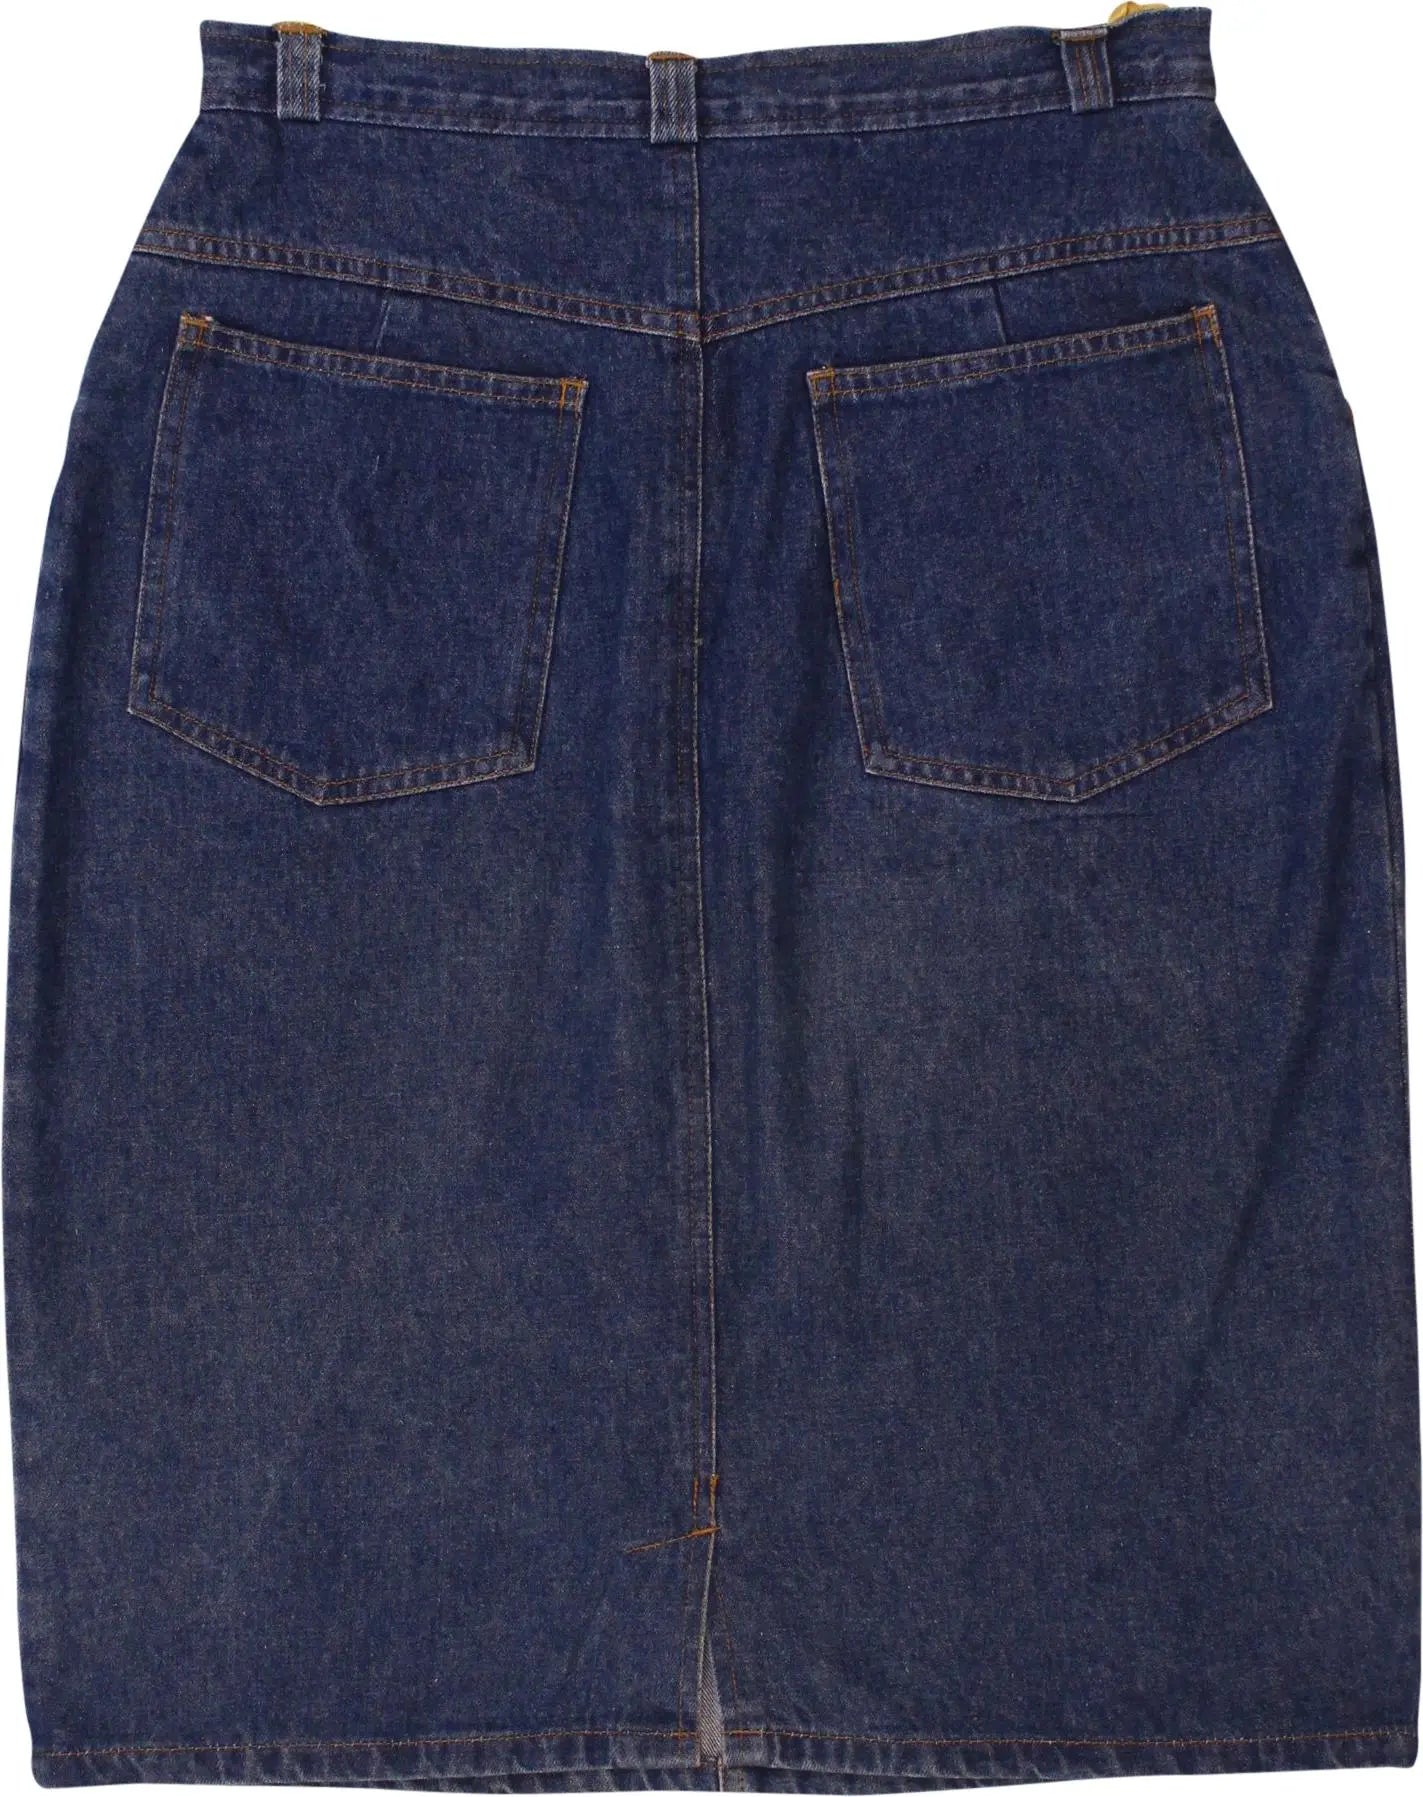 Marca - Vintage High Waisted Denim Skirt- ThriftTale.com - Vintage and second handclothing